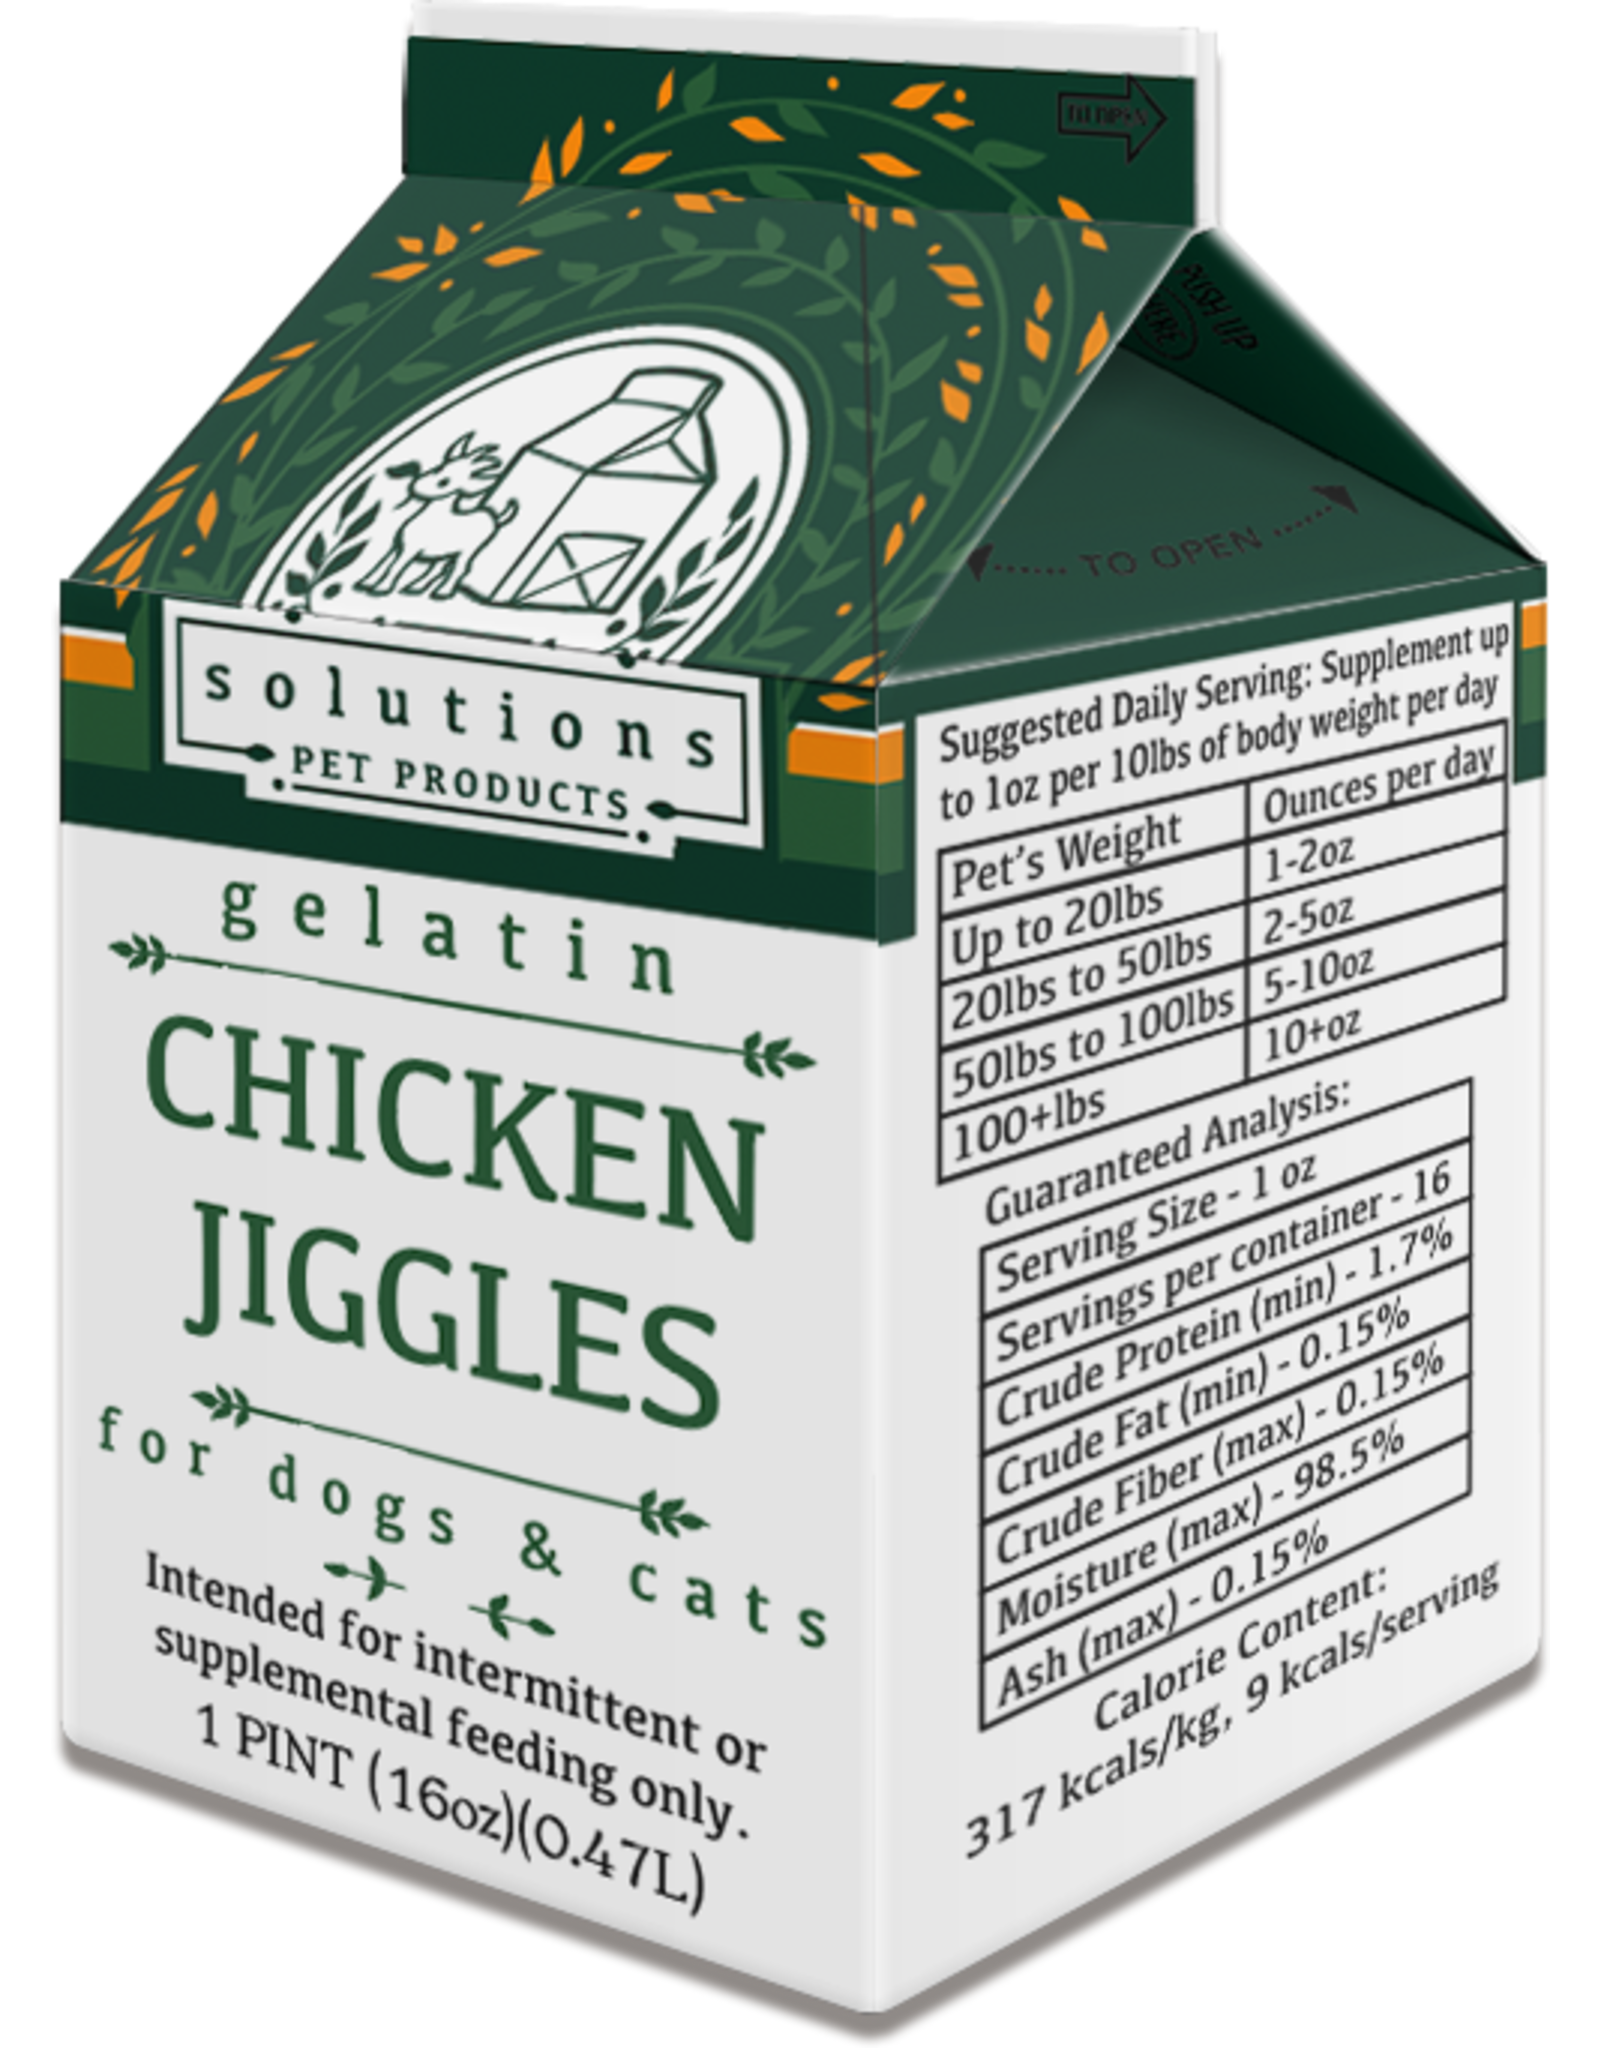 Solutions - Chicken Jiggles 16oz